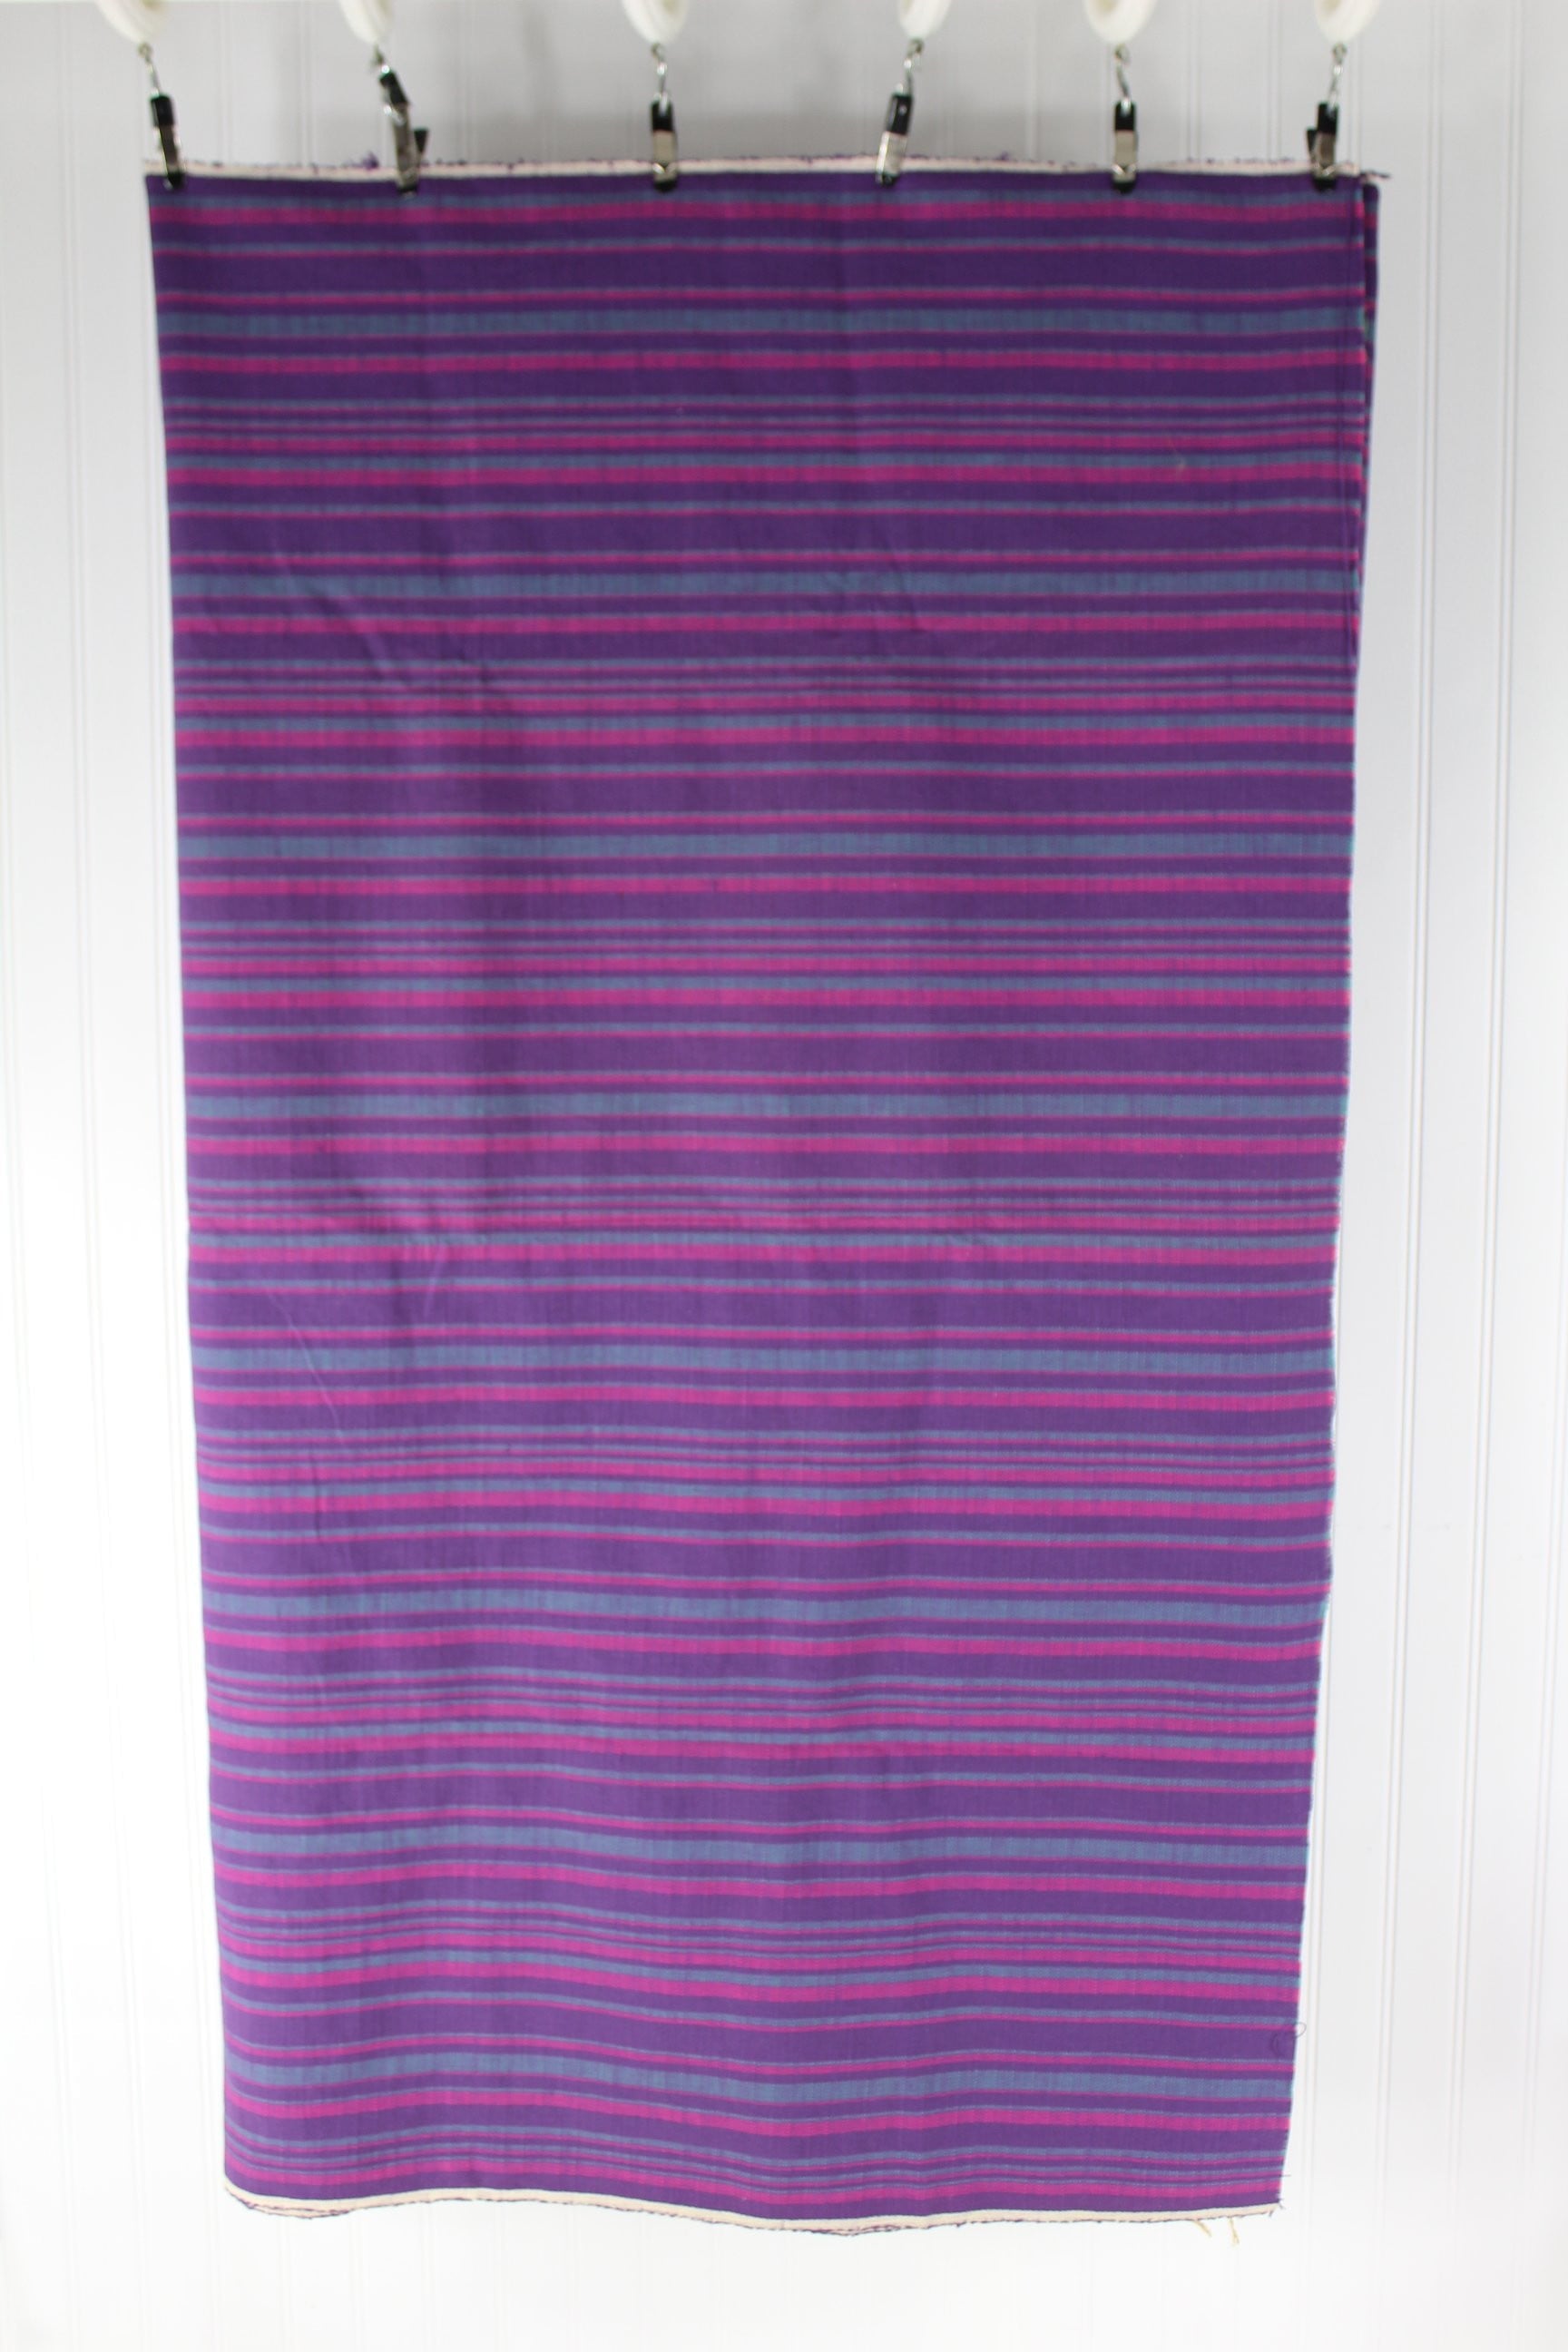 Heavy Fabric Stripe Purple Magenta Blue 3 Yards X 48" DIY Decor Crafts bags